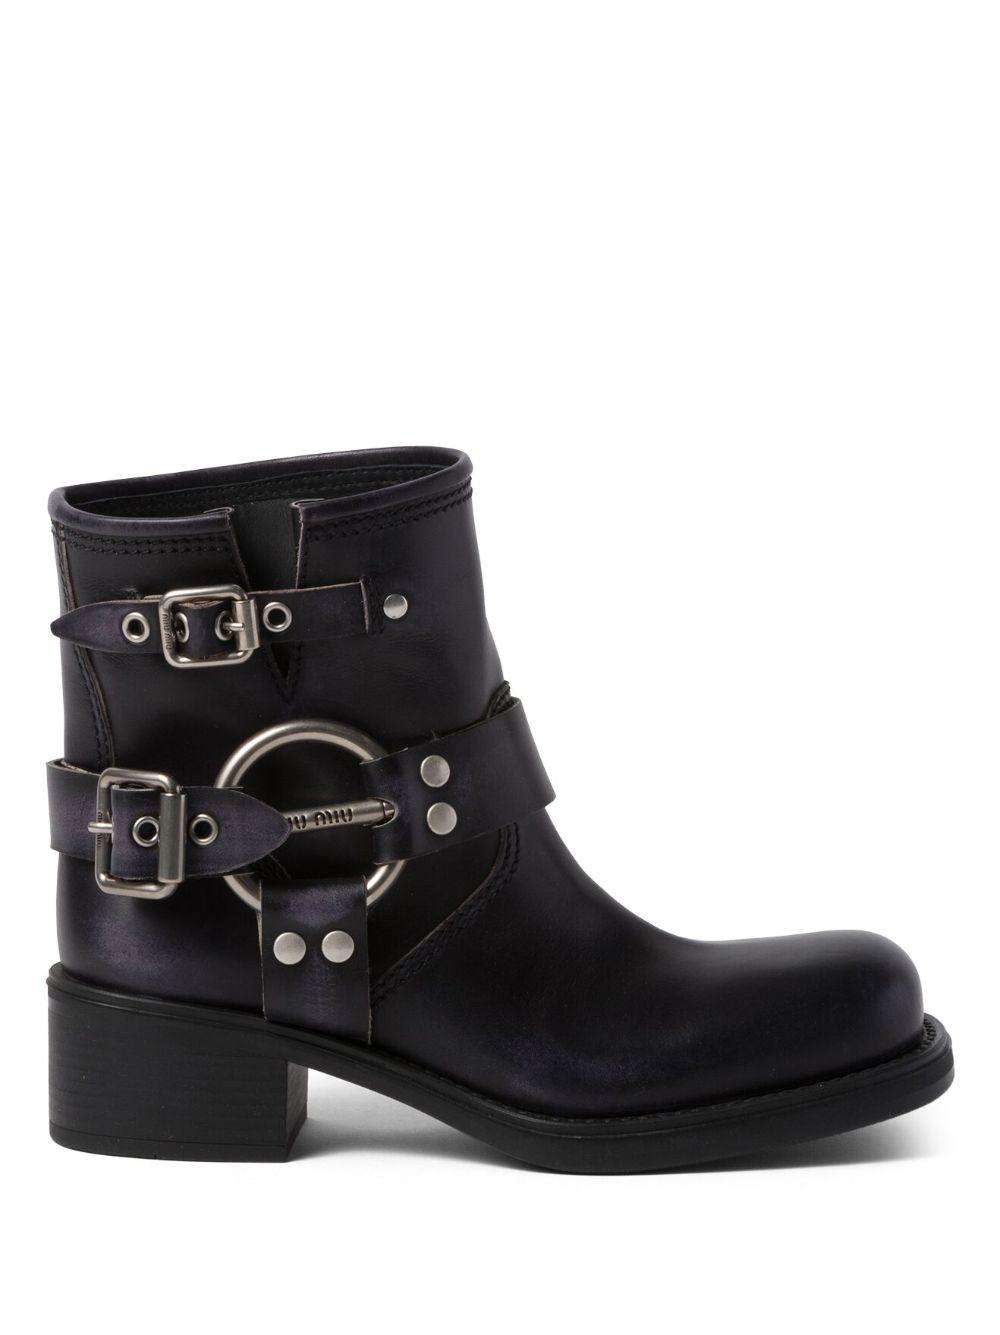 Miu Miu Vintage-look Leather Ankle Boots in Black | Lyst